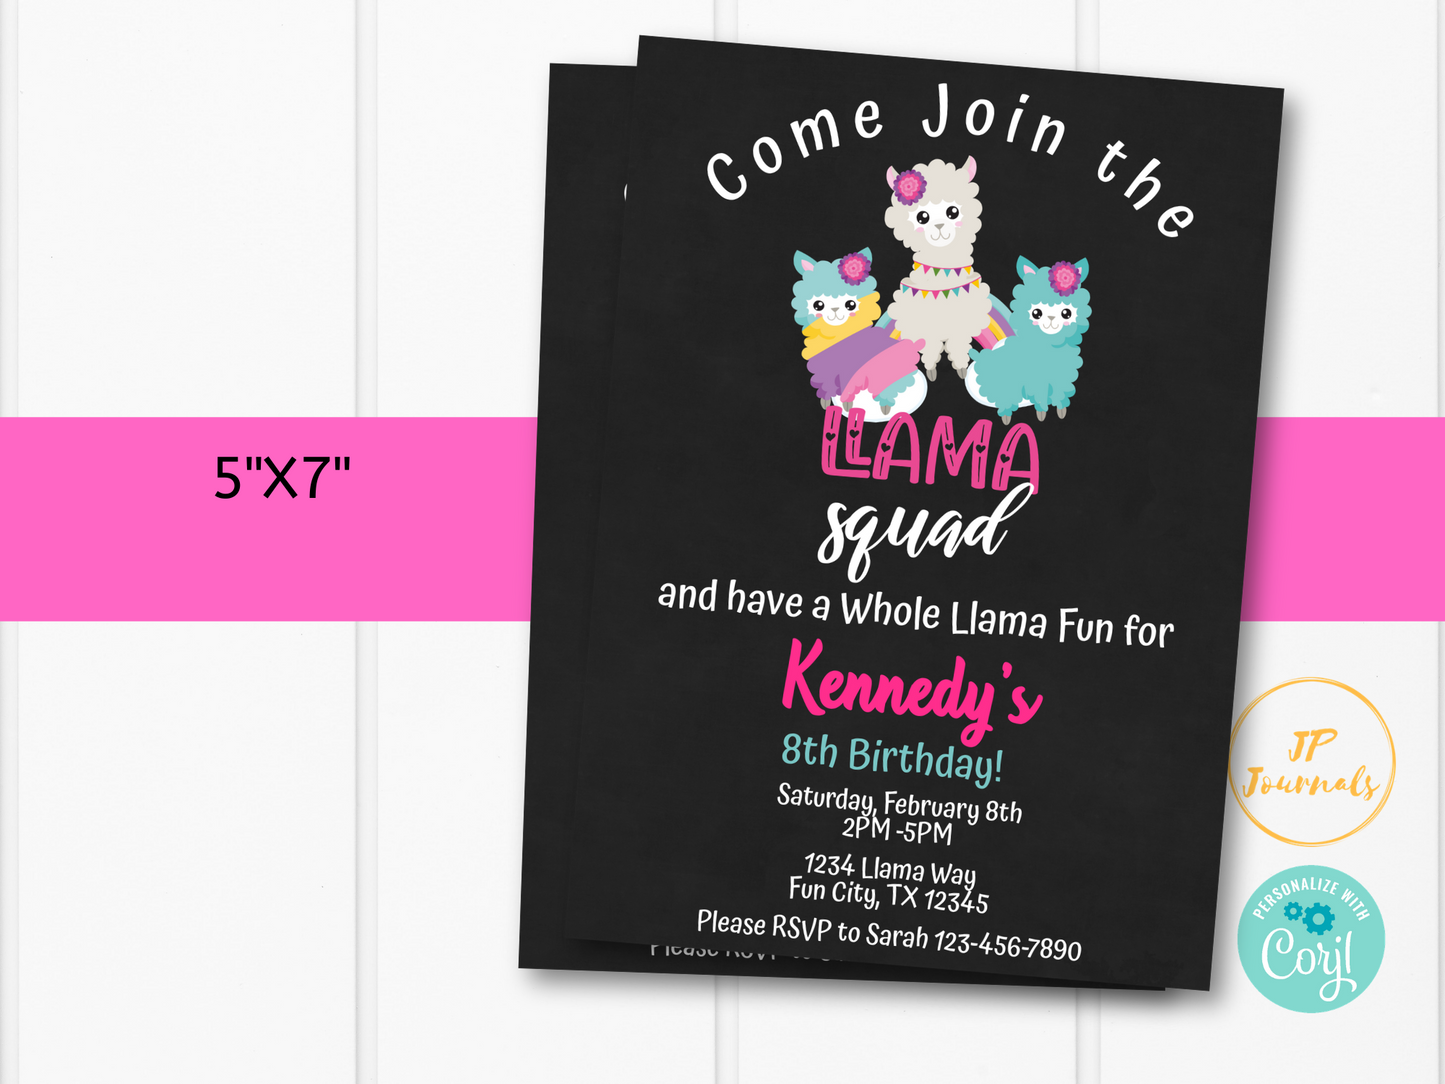 Llama Birthday Party Invitation Template - Llama Squad Whole Llama Fun - Fiesta Alpaca - Pink Purple Floral Spring Cute Invite for Girls